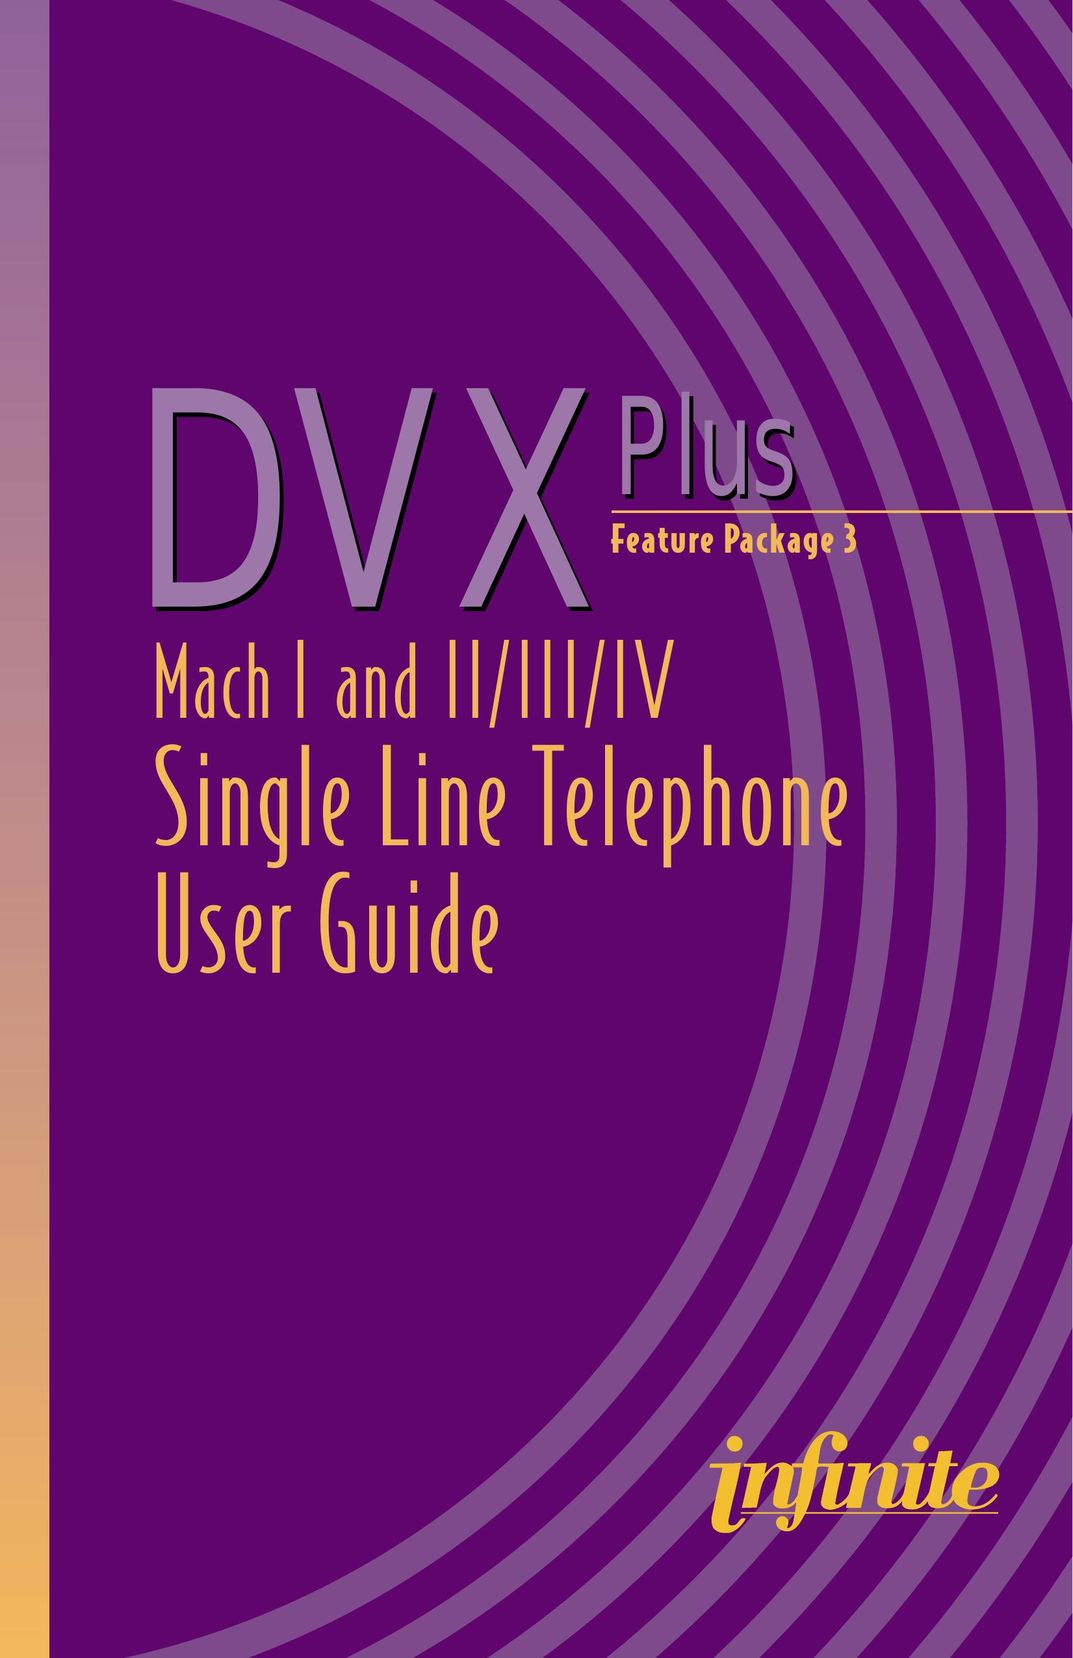 Infinite Peripherals II/III/IV Telephone User Manual